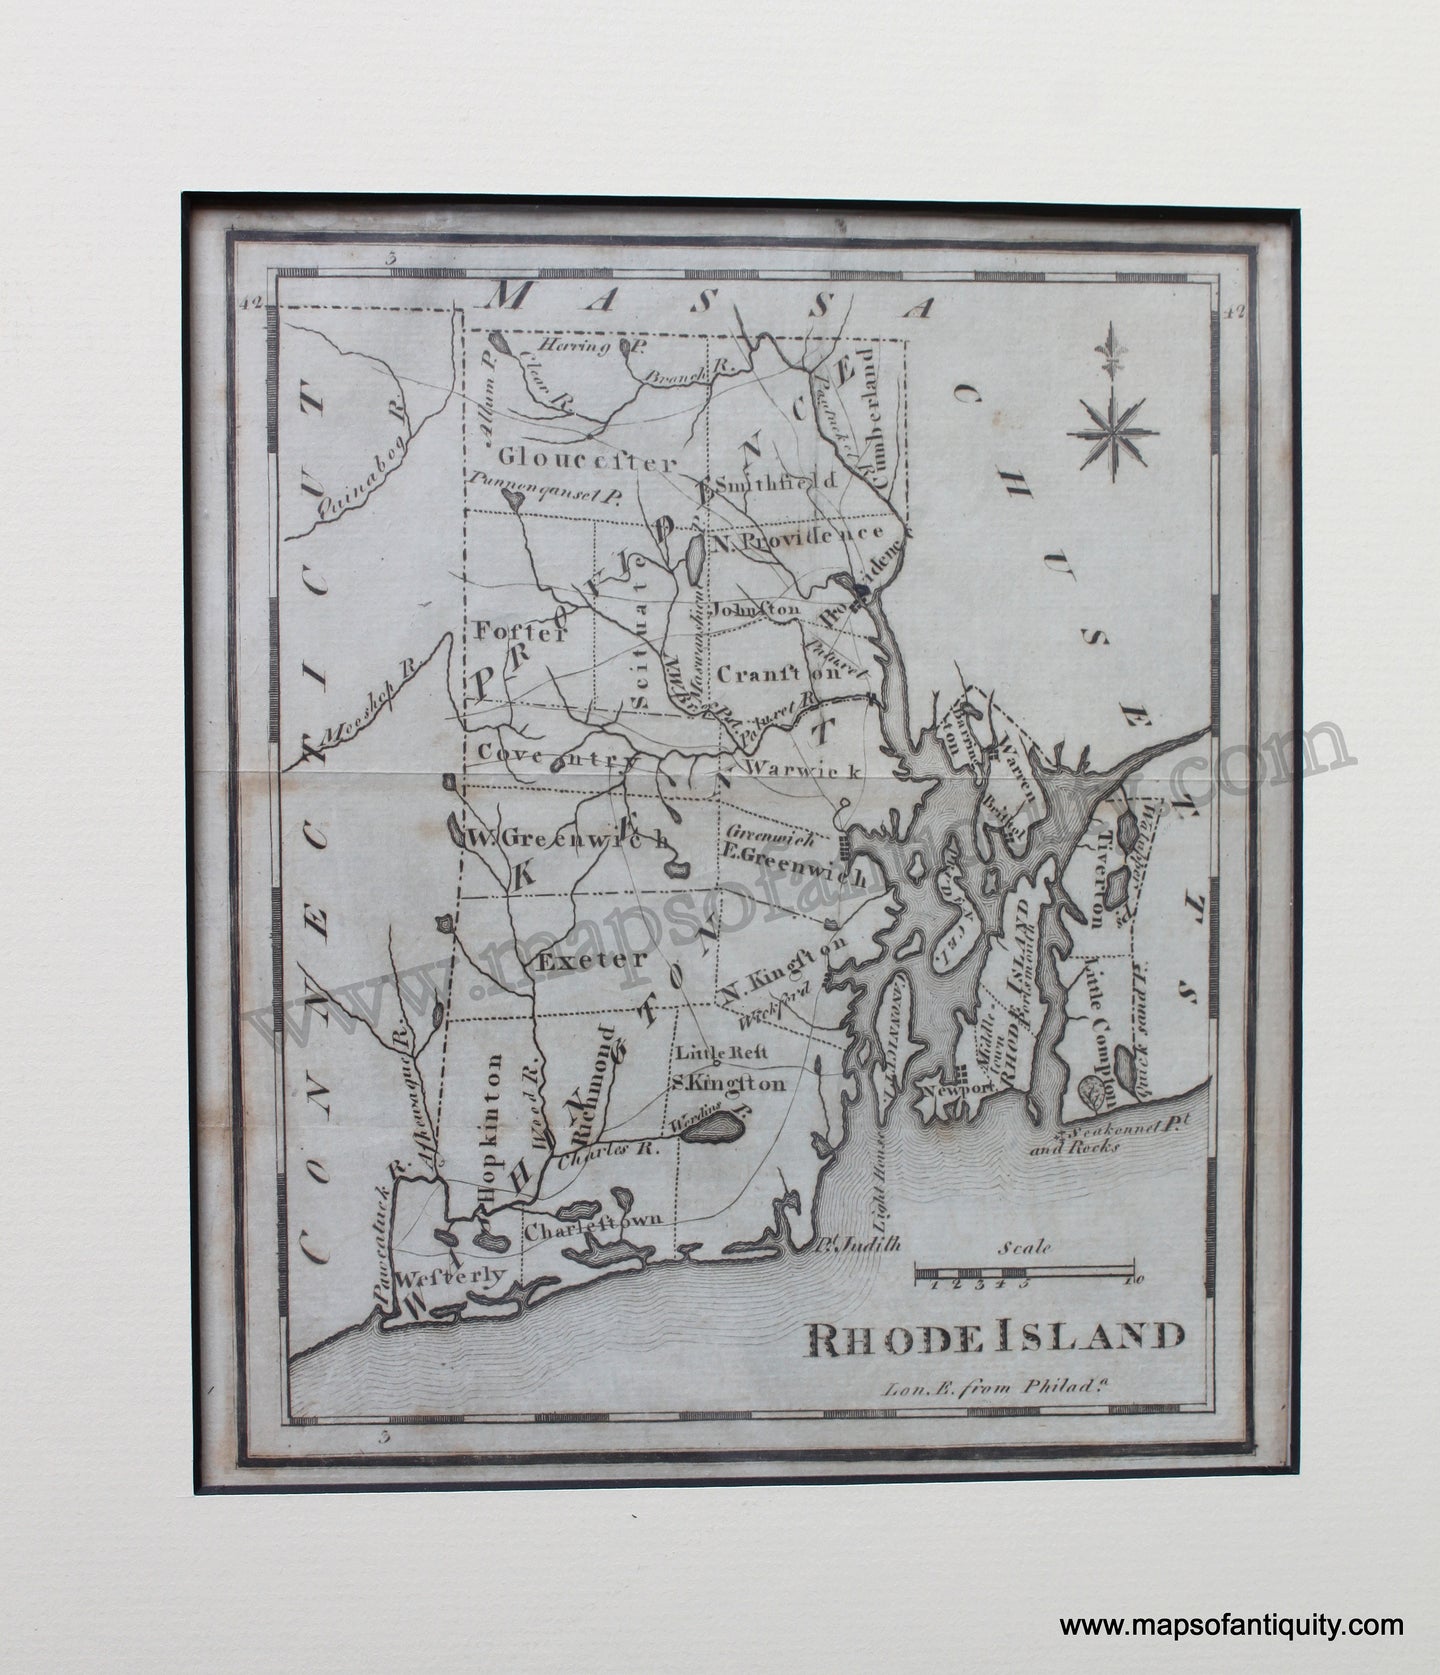 Antique-Map-Rhode-Island-1795-Scott-Rhode-Island-1700s-18th-century-Maps-of-Antiquity